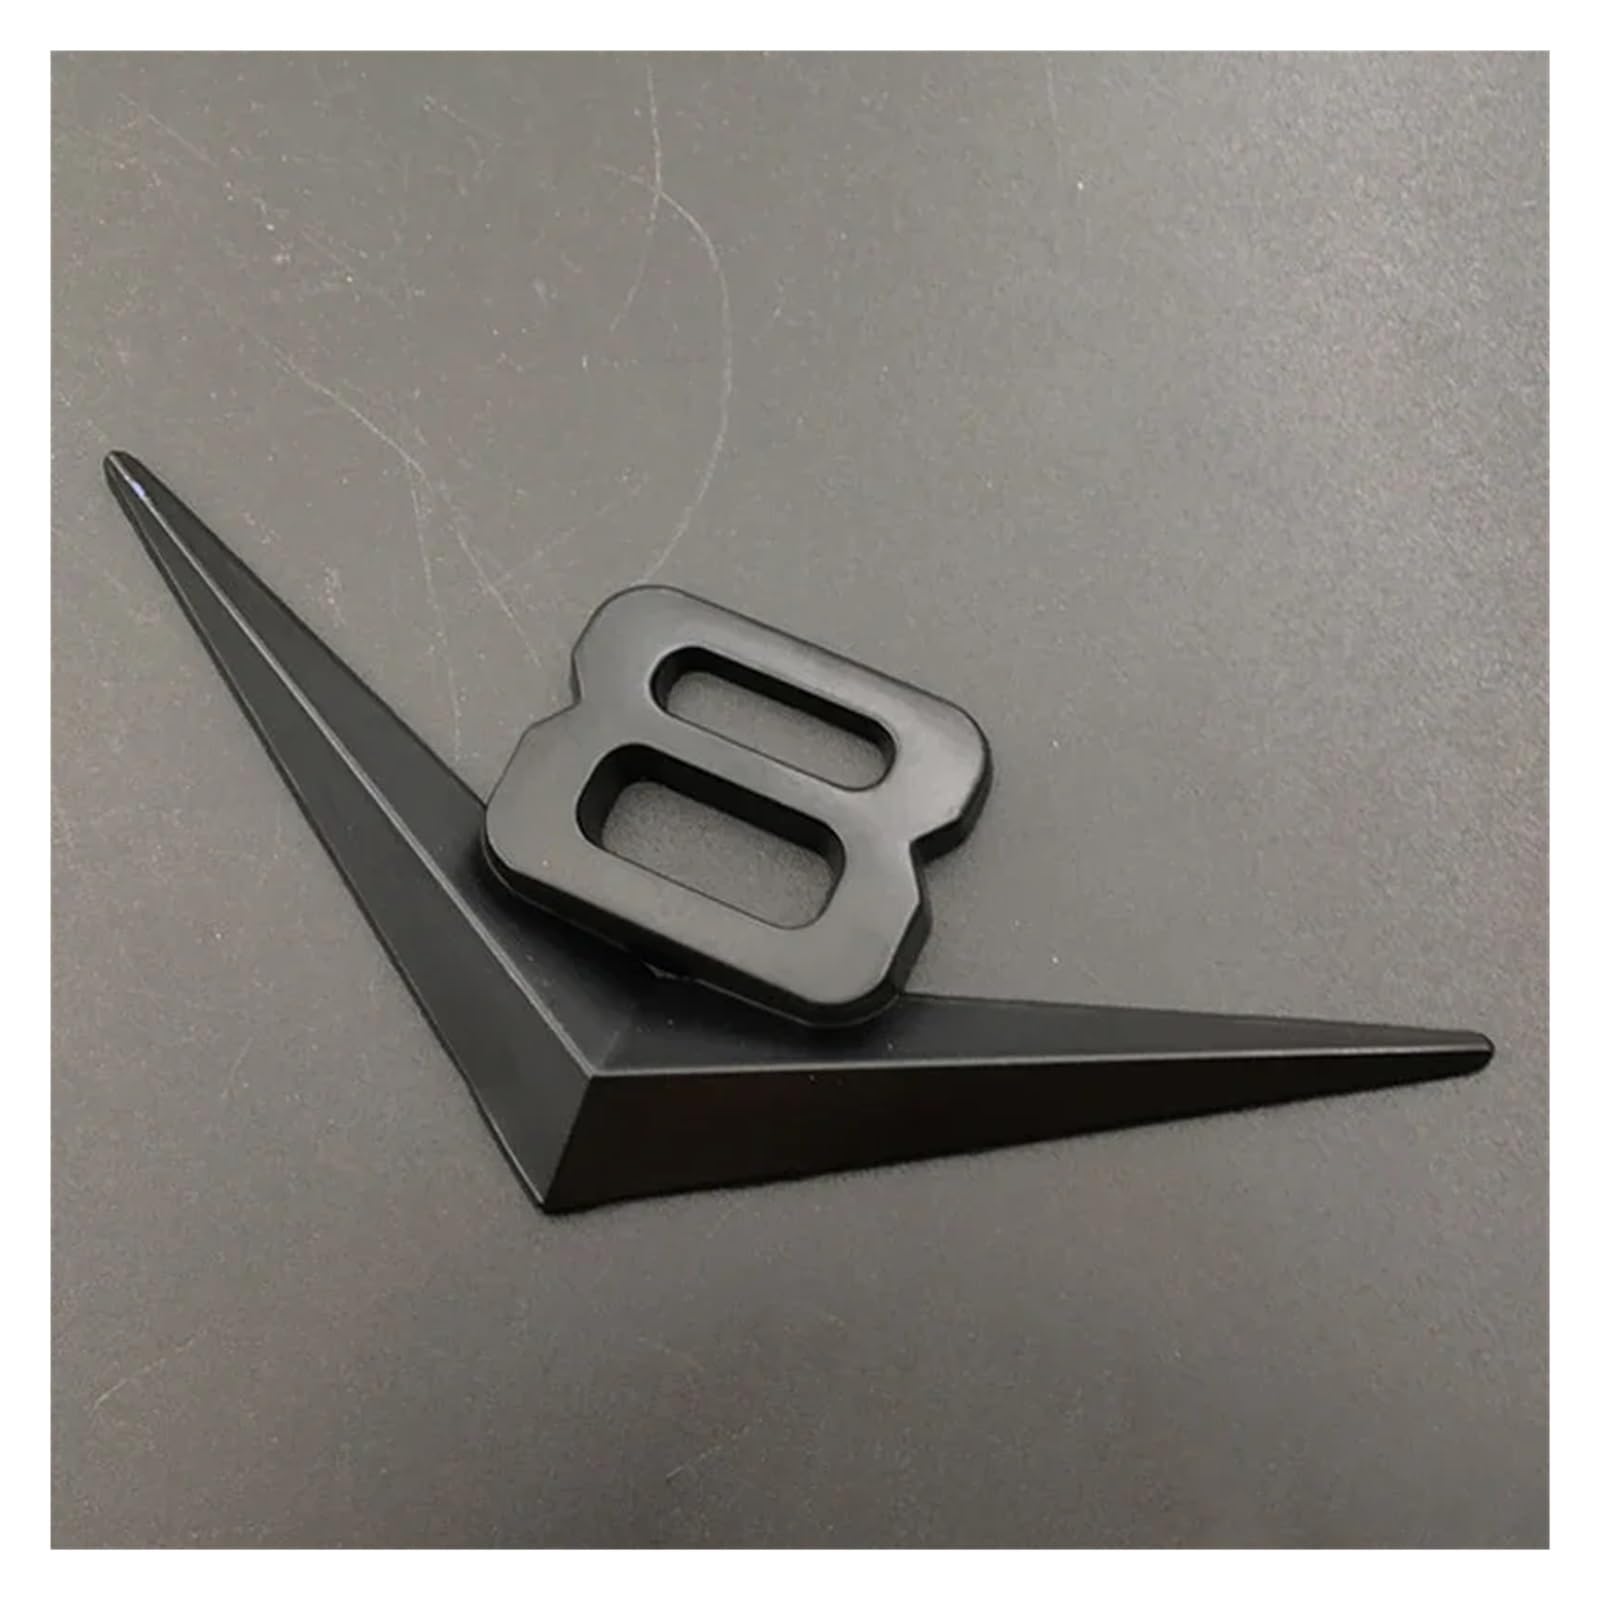 AQXYWQOL 3D Metall Chrom Schwarz V6 V8 Buchstaben Hinten Kofferraum Kotflügel Abzeichen Emblem Aufkleber Aufkleber Farbe ist konstant, verblasst nicht und beschädigt(V8 Black) von AQXYWQOL